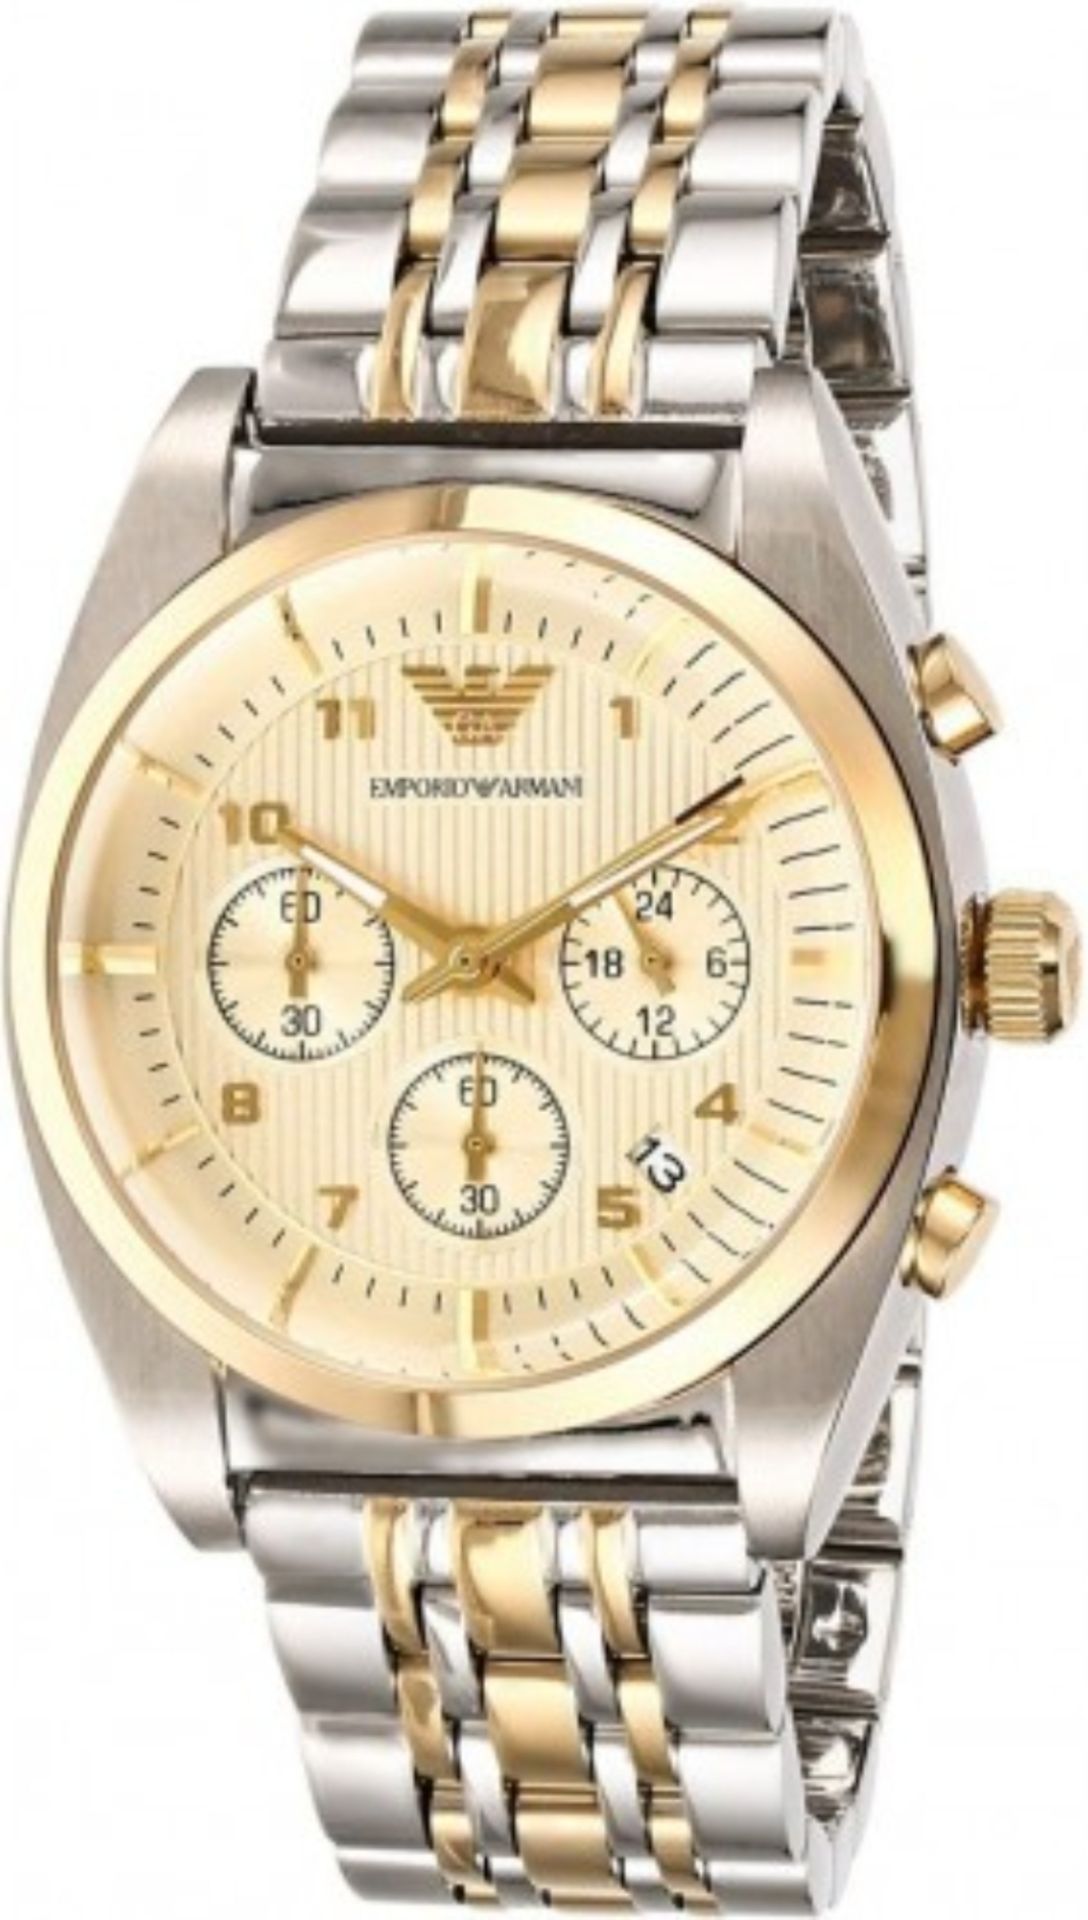 Emporio Armani AR0396 Men's Two Tone Gold & Silver Quartz Chronograph Watch - Image 3 of 7